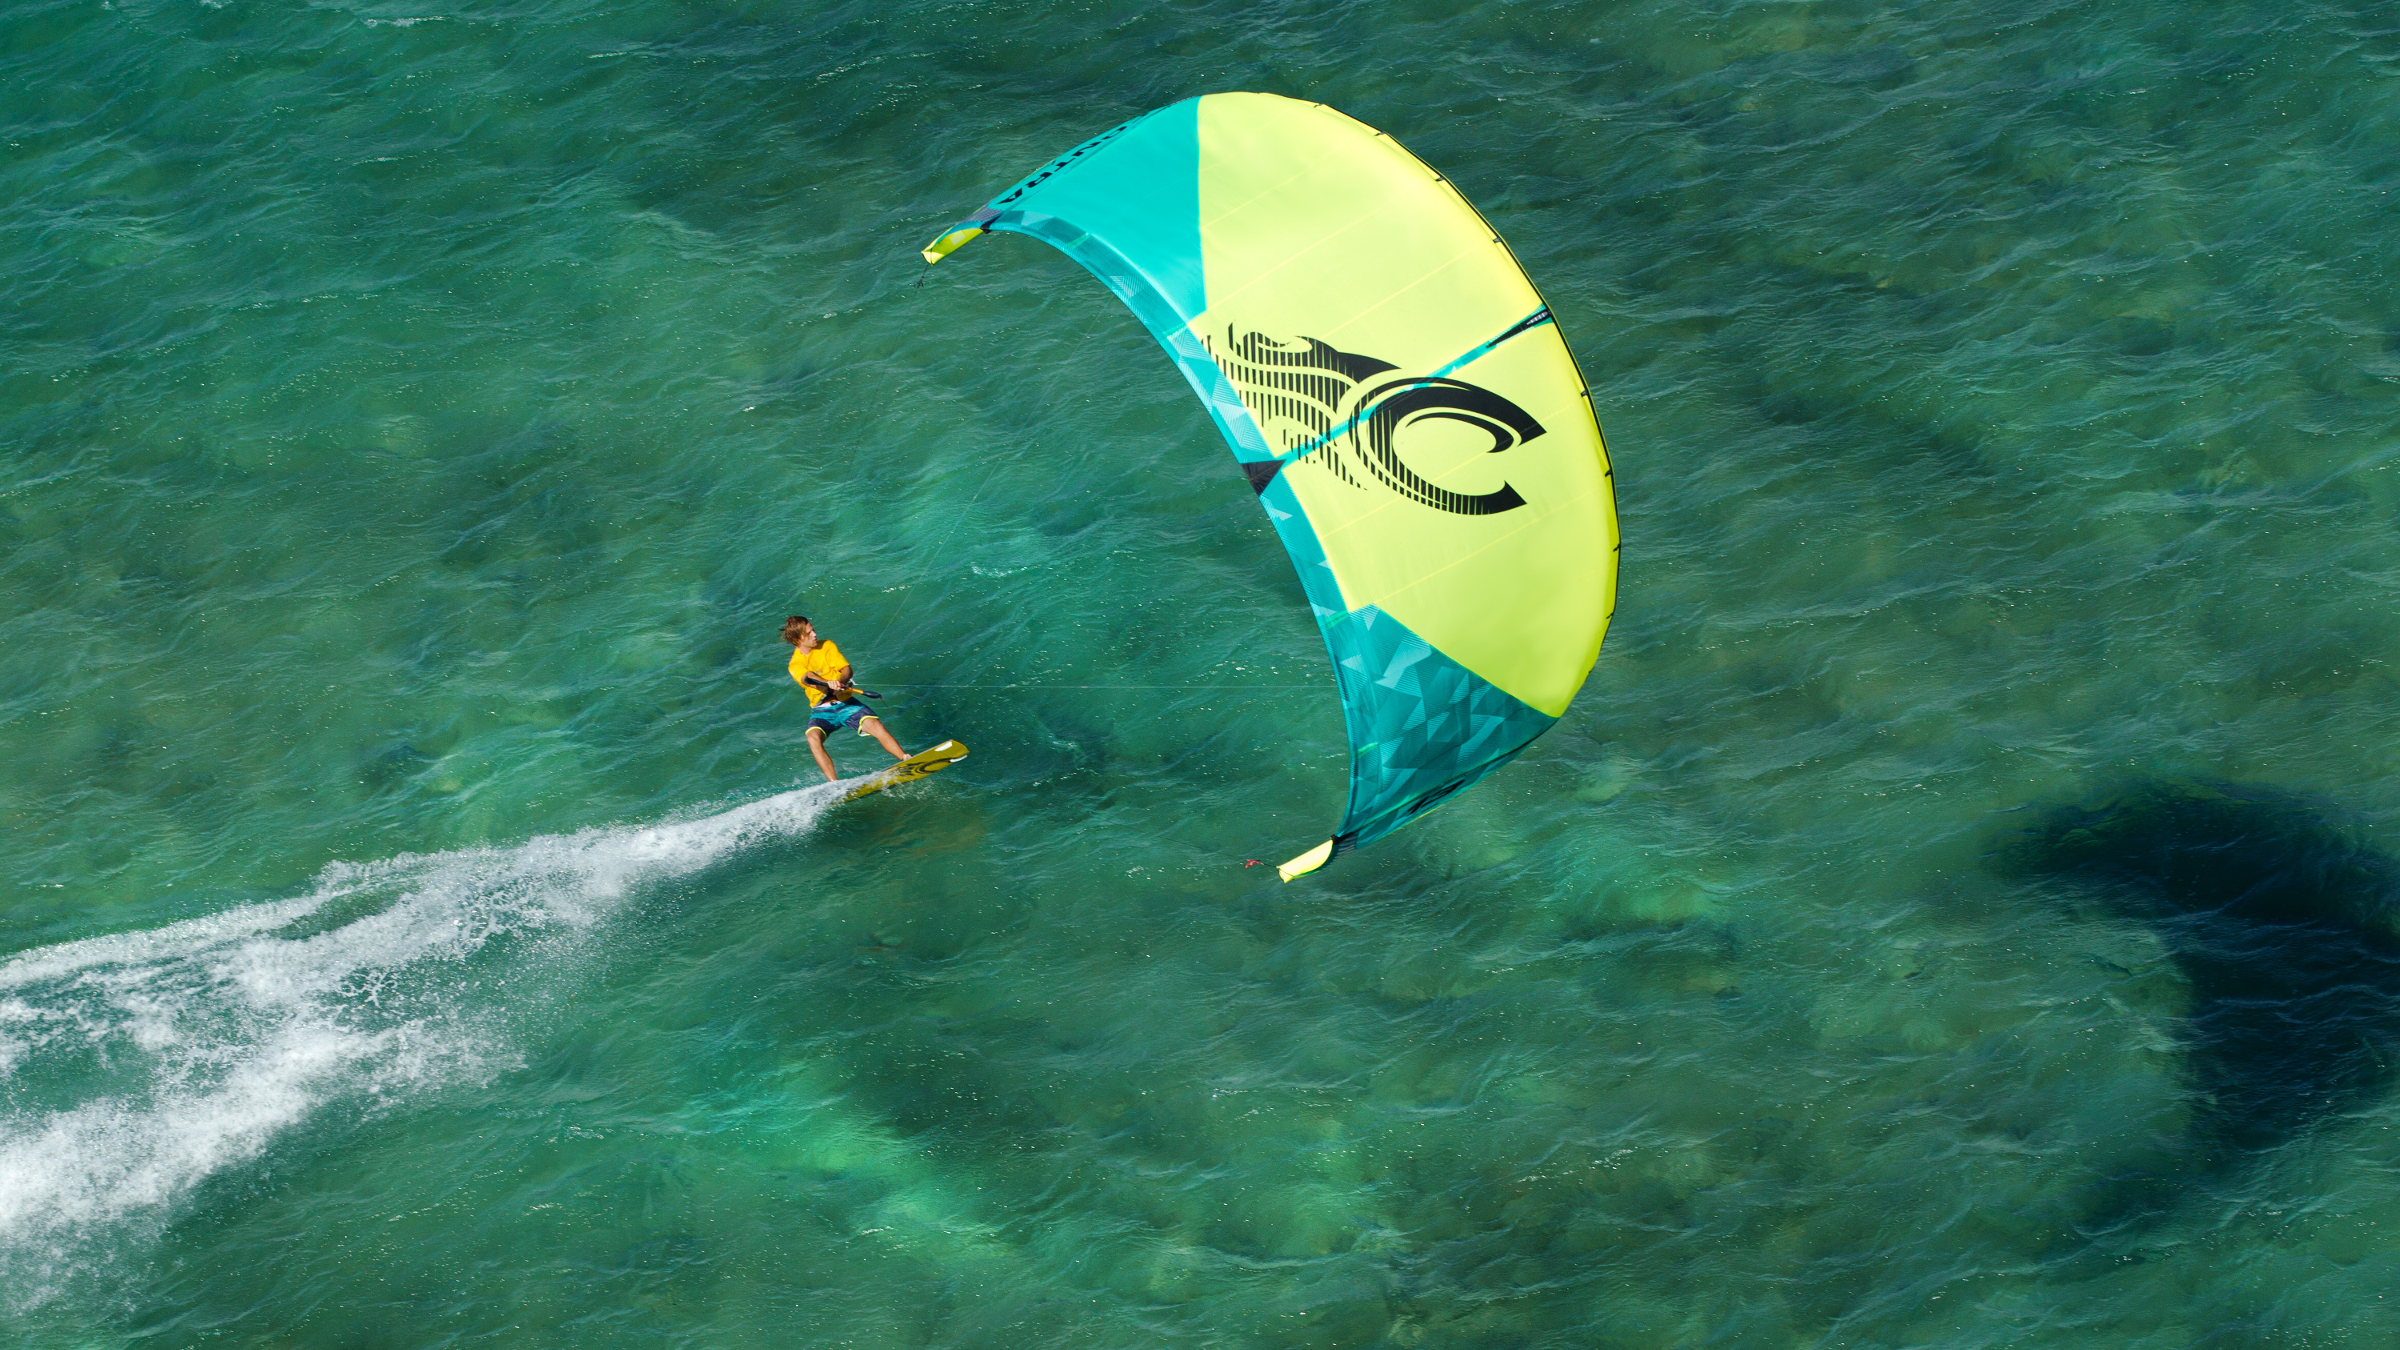 kitesurf wallpaper image - Kitesurfing  on the 2015 Cabrinha Contra kite - in resolution: High Definition - HD 16:9 2400 X 1350